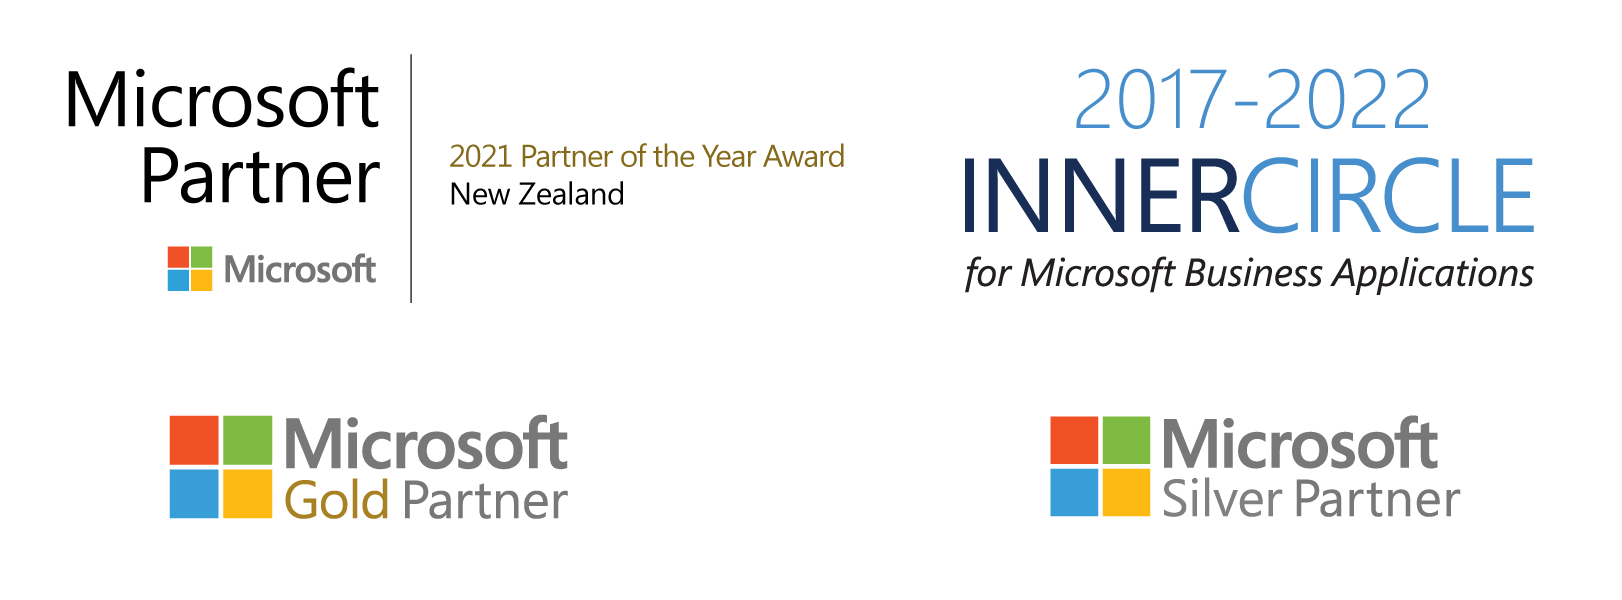 Fusion5 Microsoft awards 2021